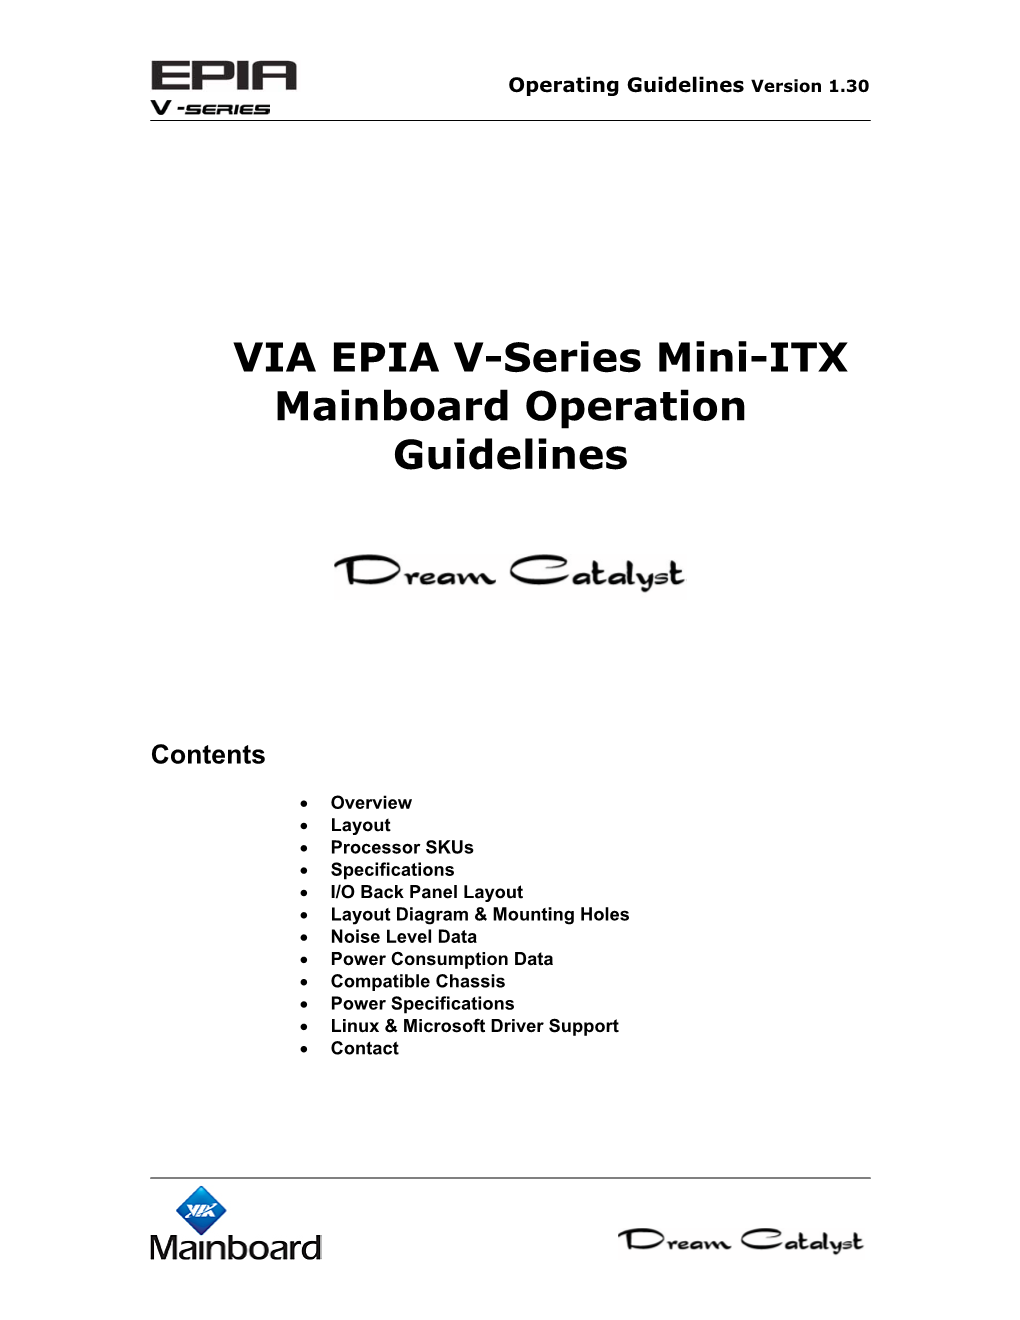 VIA EPIA V-Series Mini-ITX Mainboard Operation Guidelines